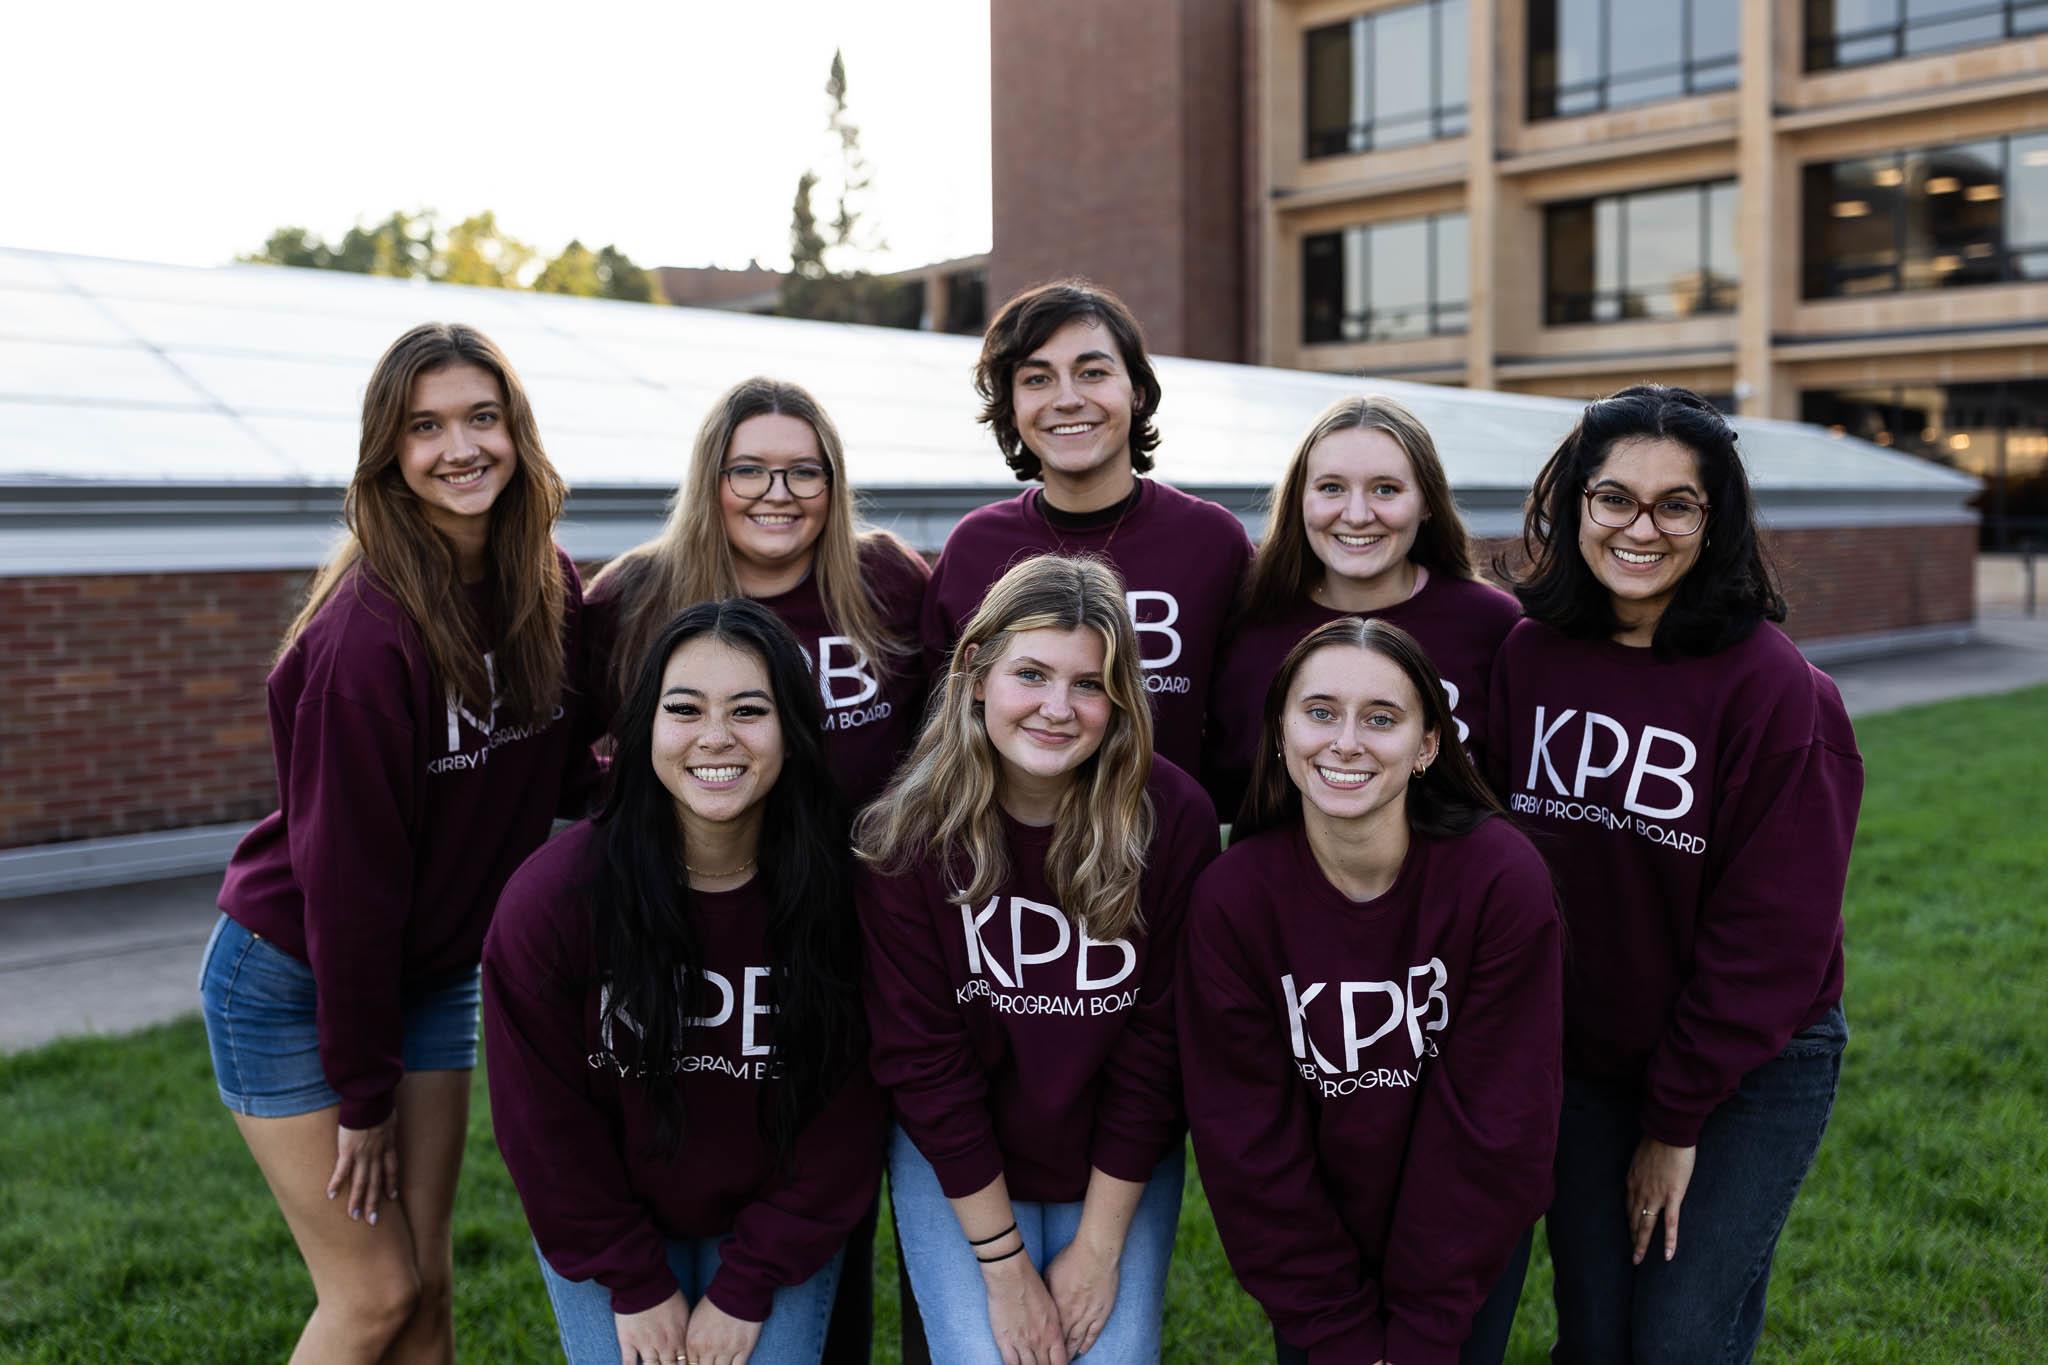 8 students with "KPB" sweatshirts